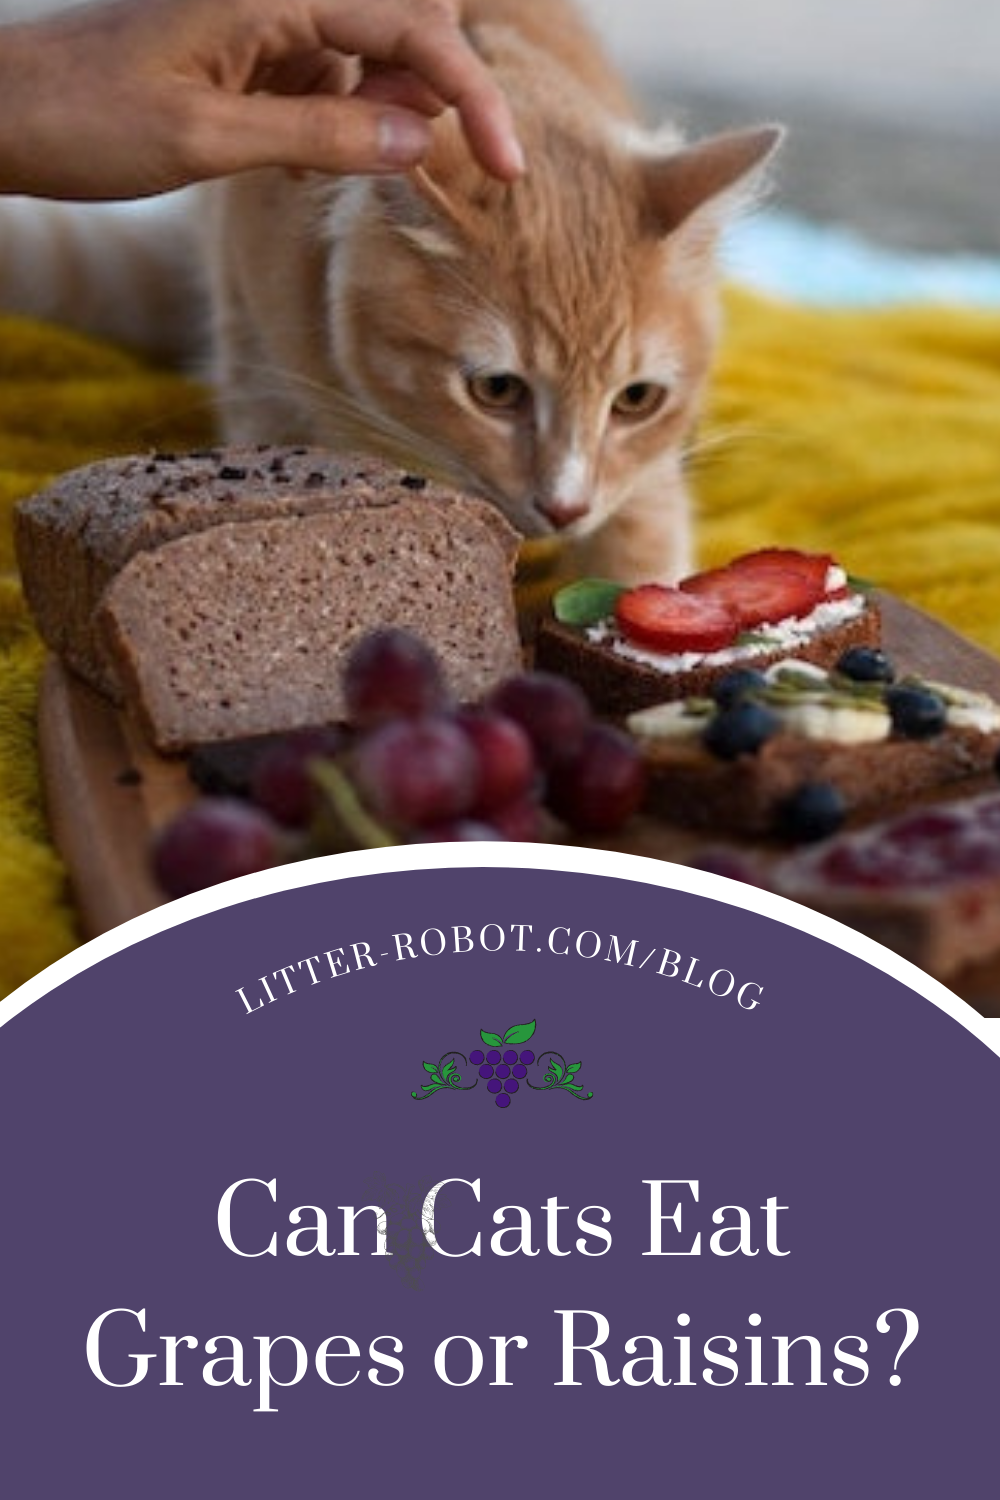 Can Cats Eat Grapes or Raisins? Learn more on LitterRobot Blog